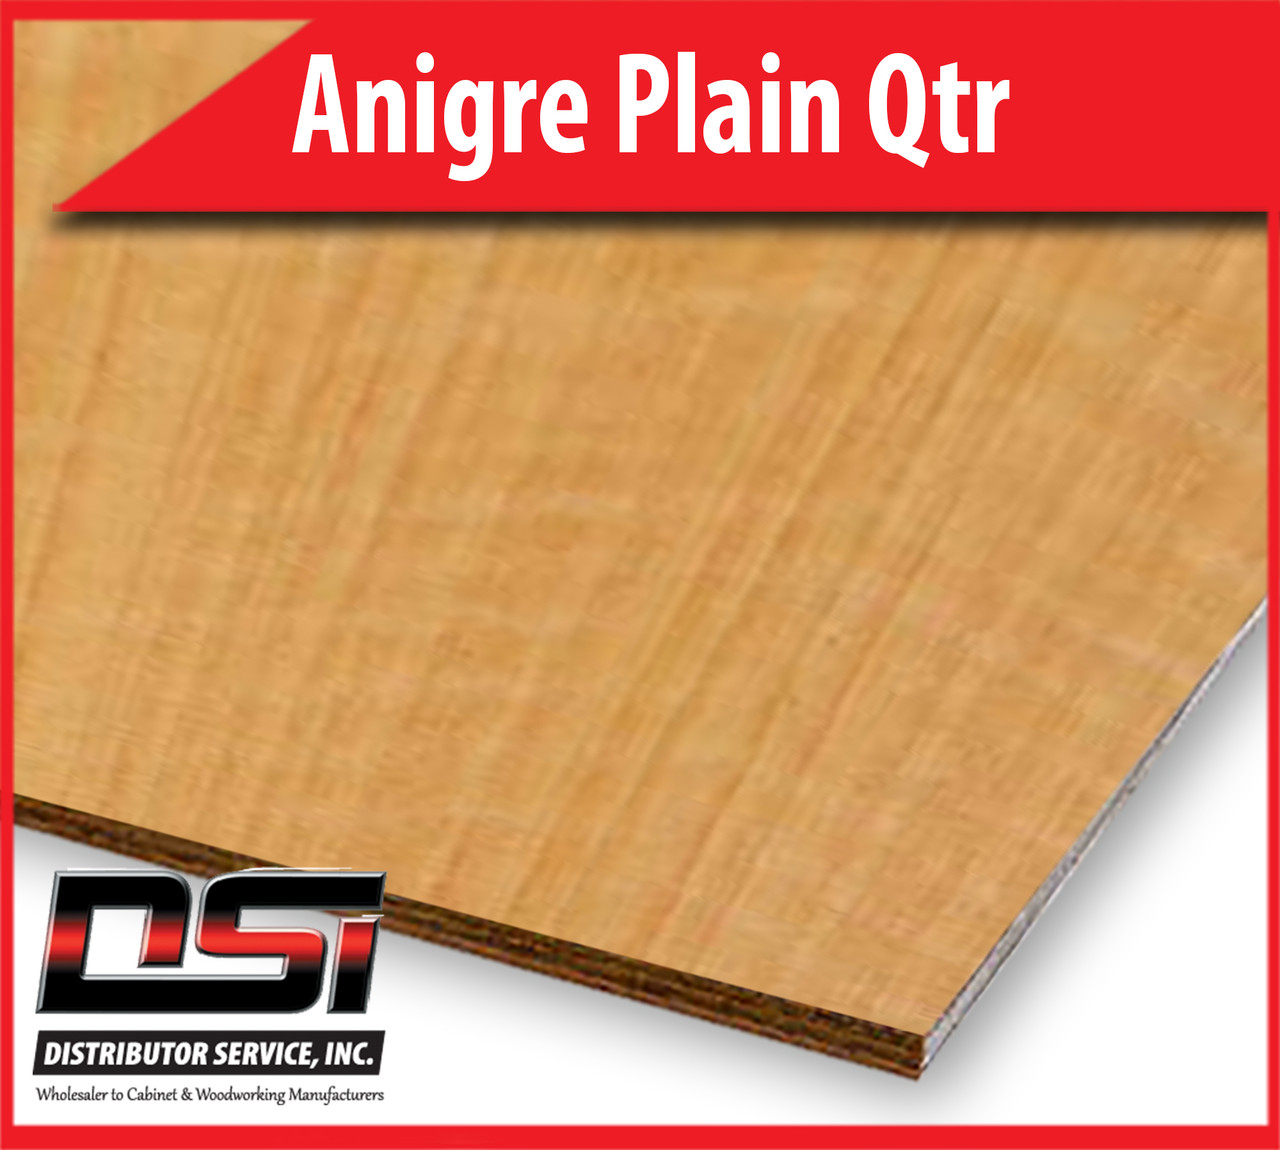 Anigre Plain Qtr Plywood Eurocore A-A 1/2" x 4x8